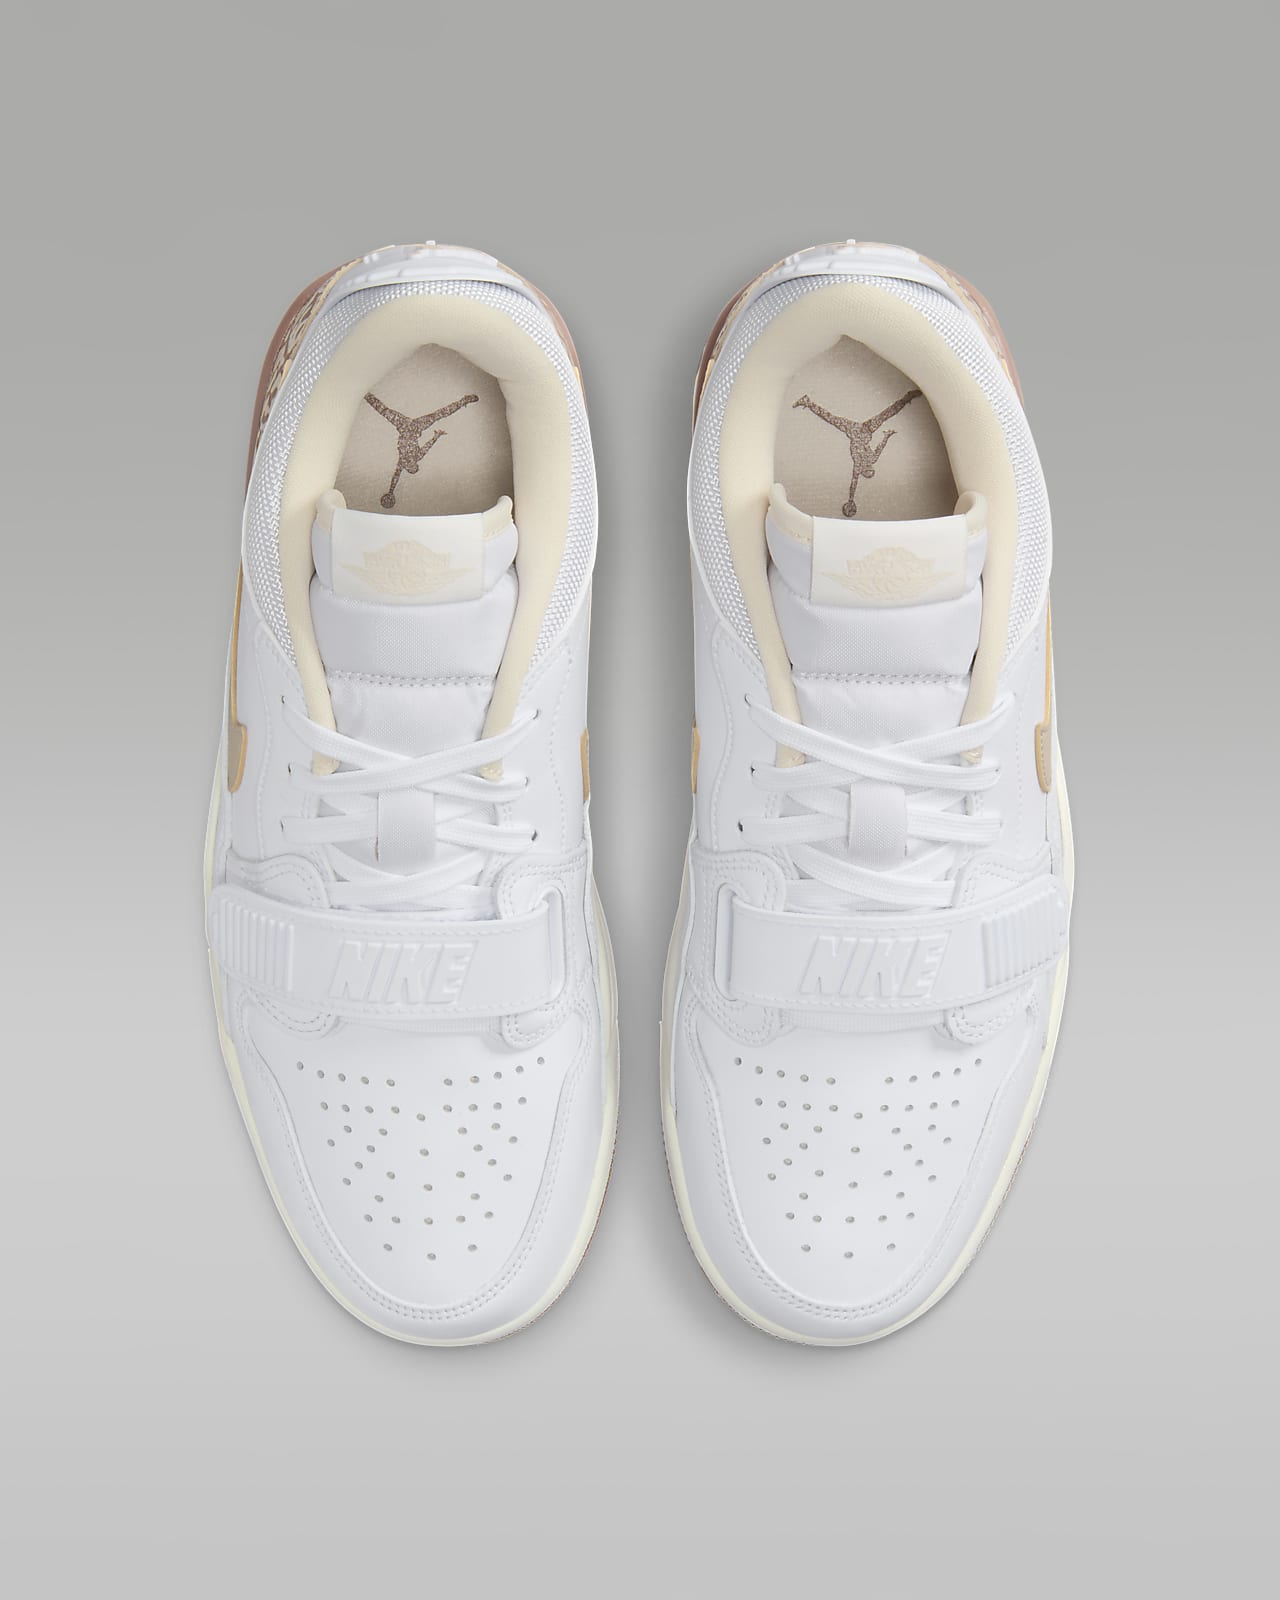 Air Jordan Legacy 312 Low Women's Shoes